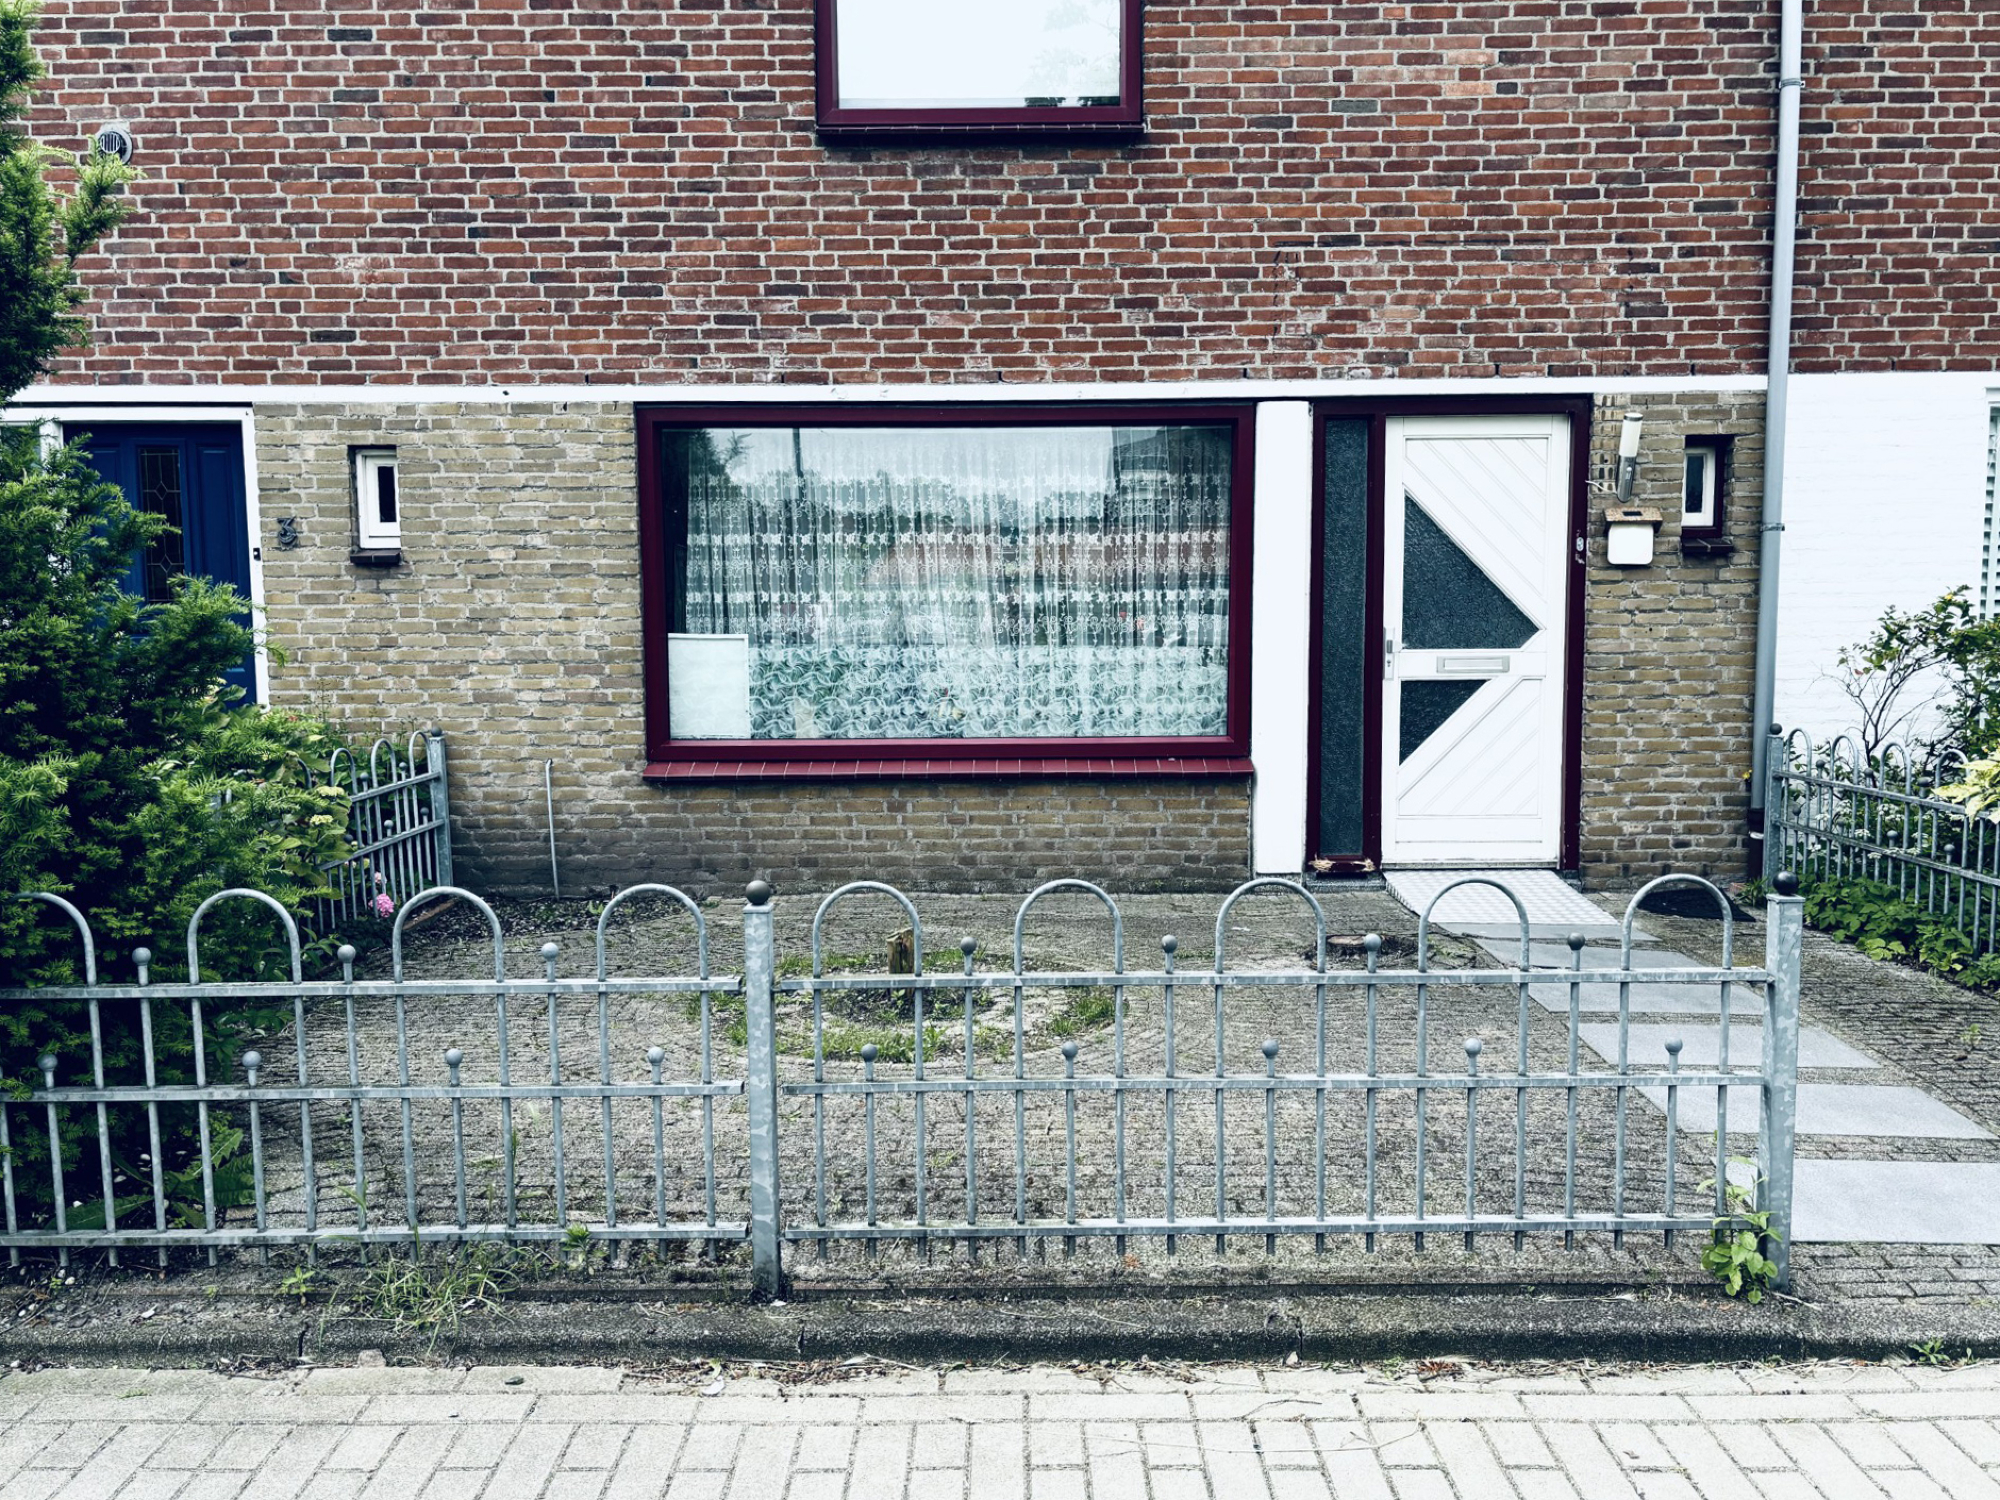 Vergroening Nederlandse steden en dorpen loopt terug